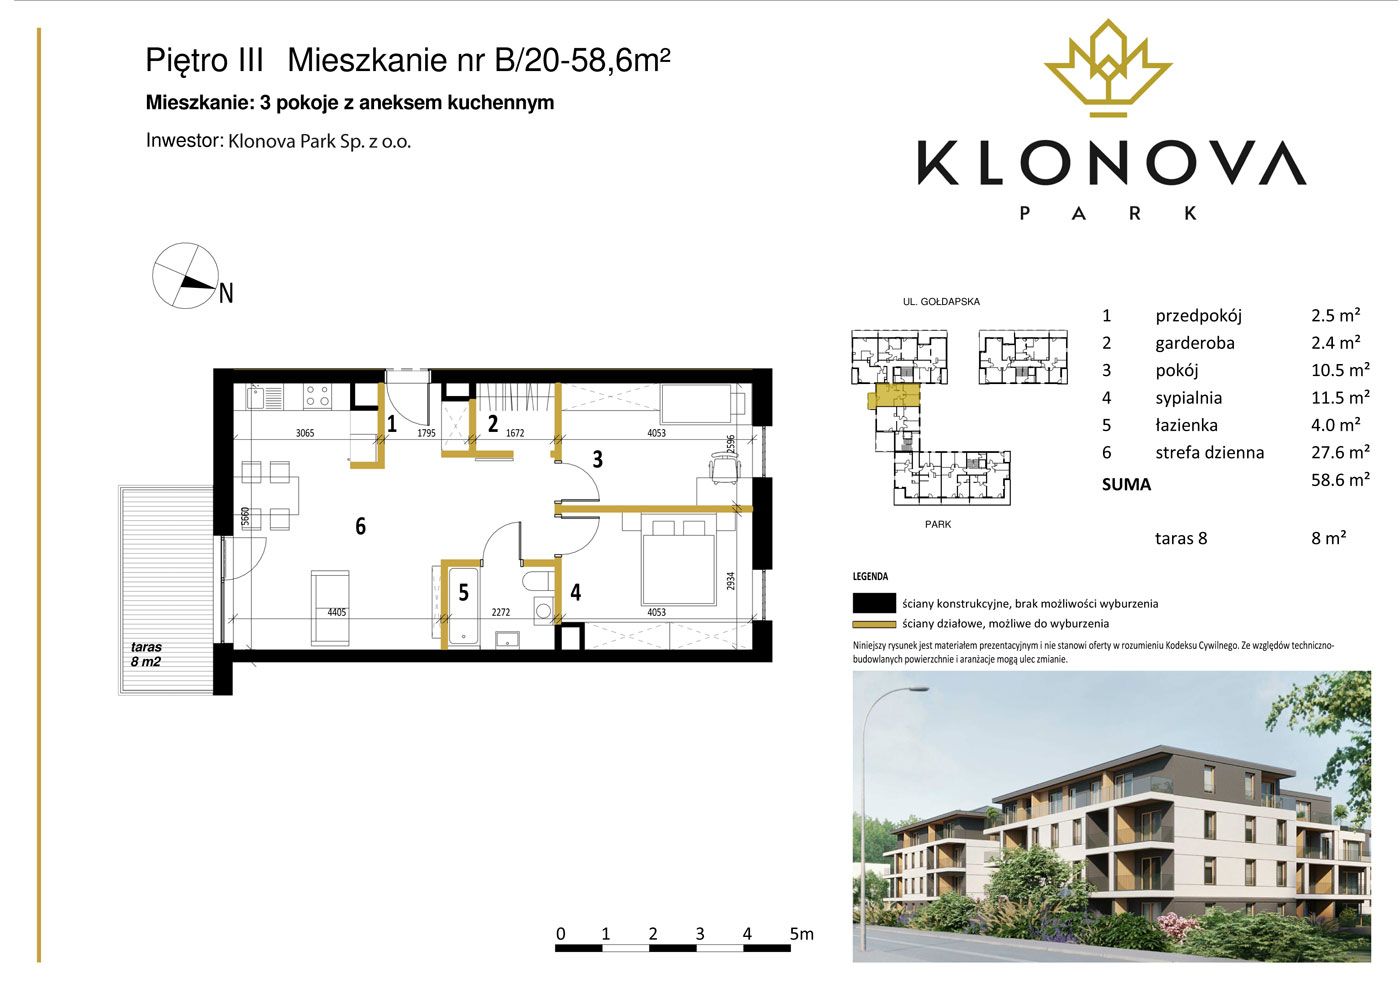 Apartamenty Klonova Park - Plan mieszkania B/20